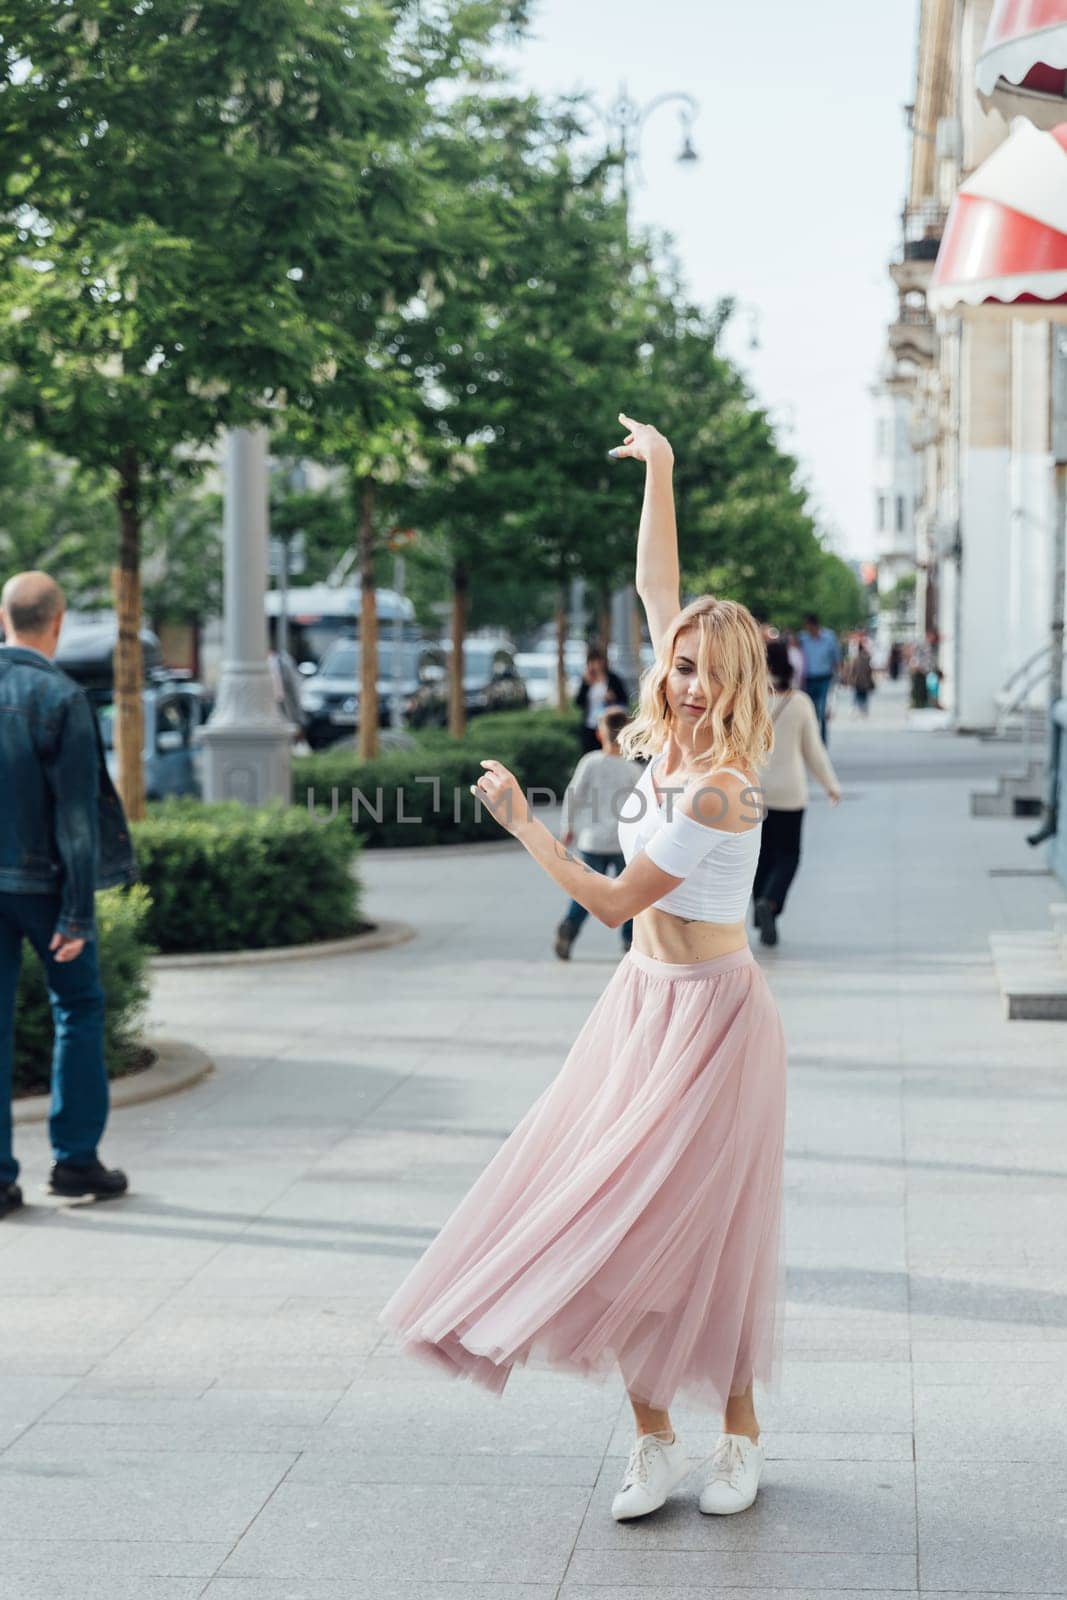 Slender blonde dancing on the street by Simakov